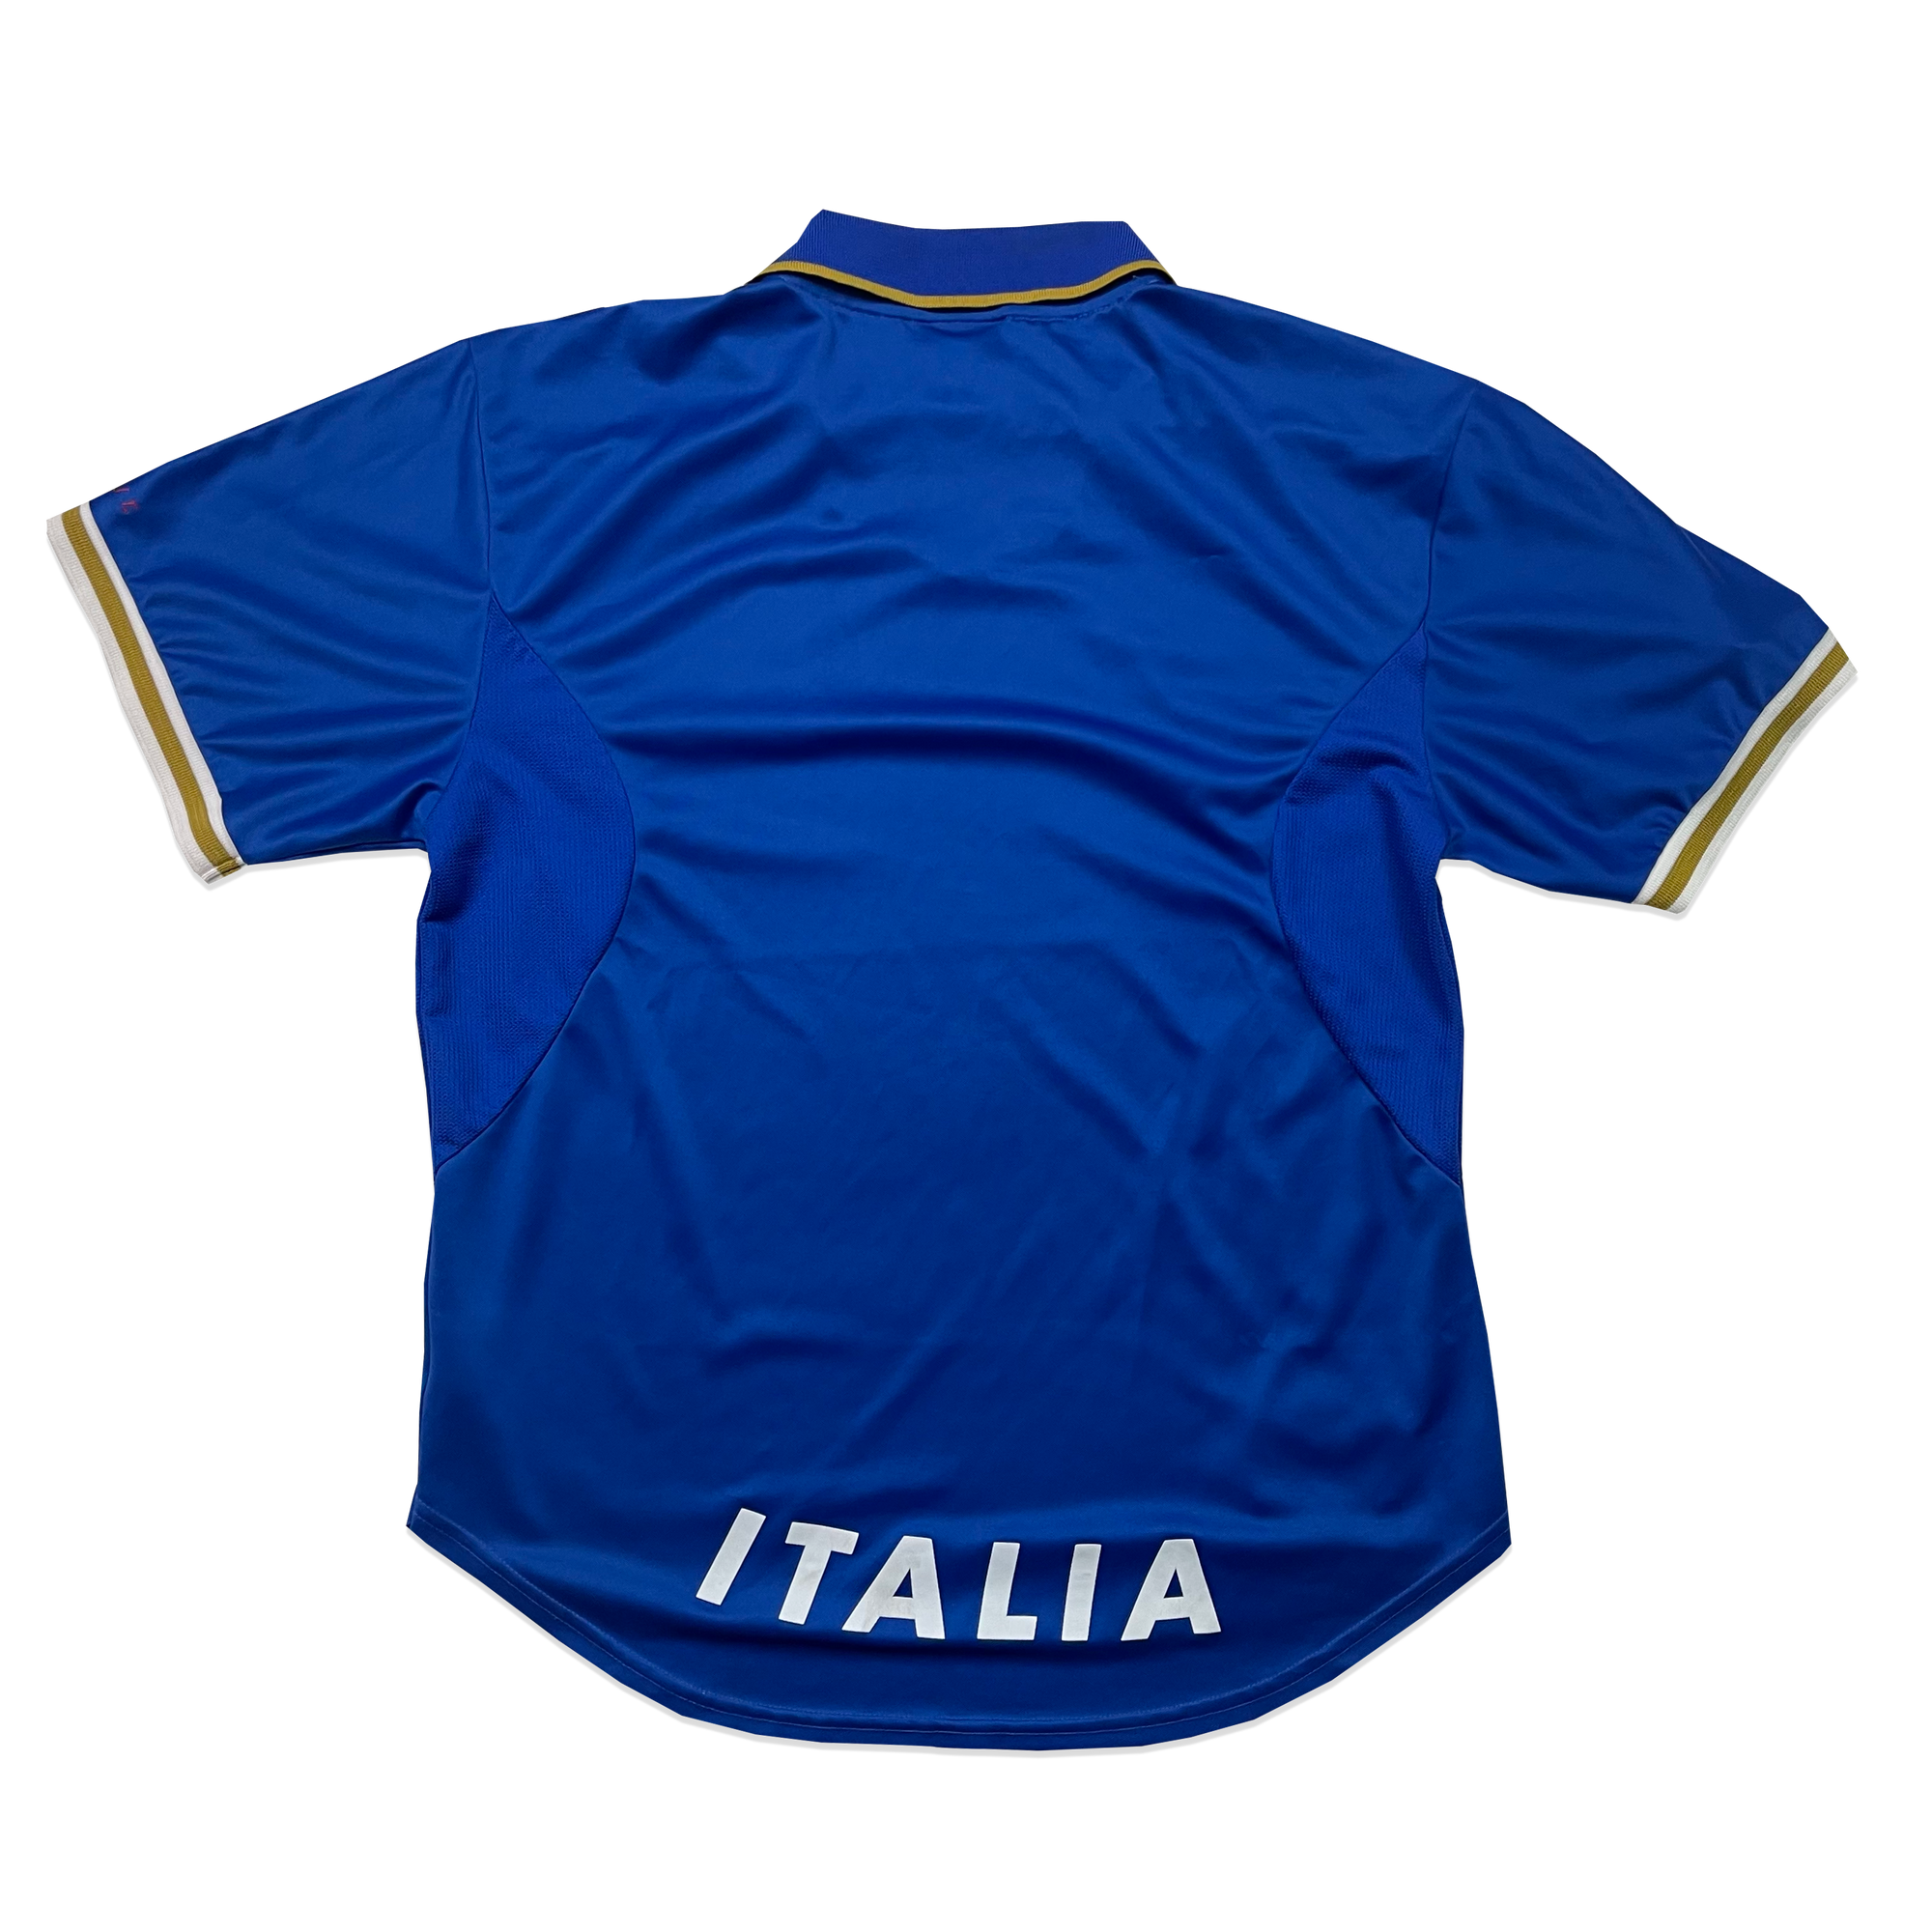 Maillot de Foot Italie - Nike - Bleu